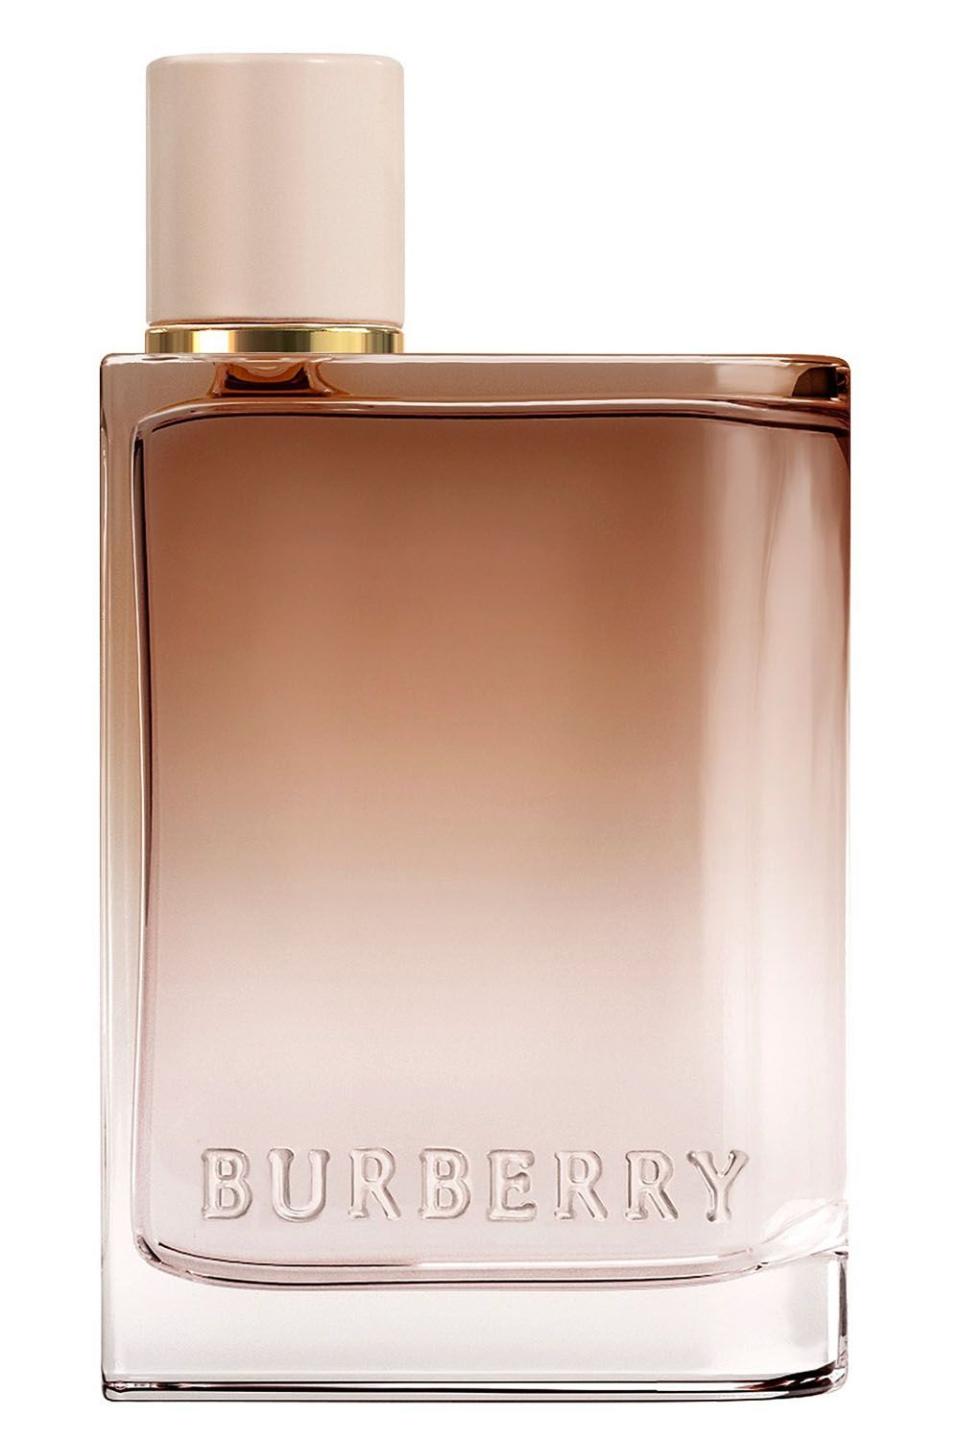 13) Burberry Her Intense Eau de Parfum